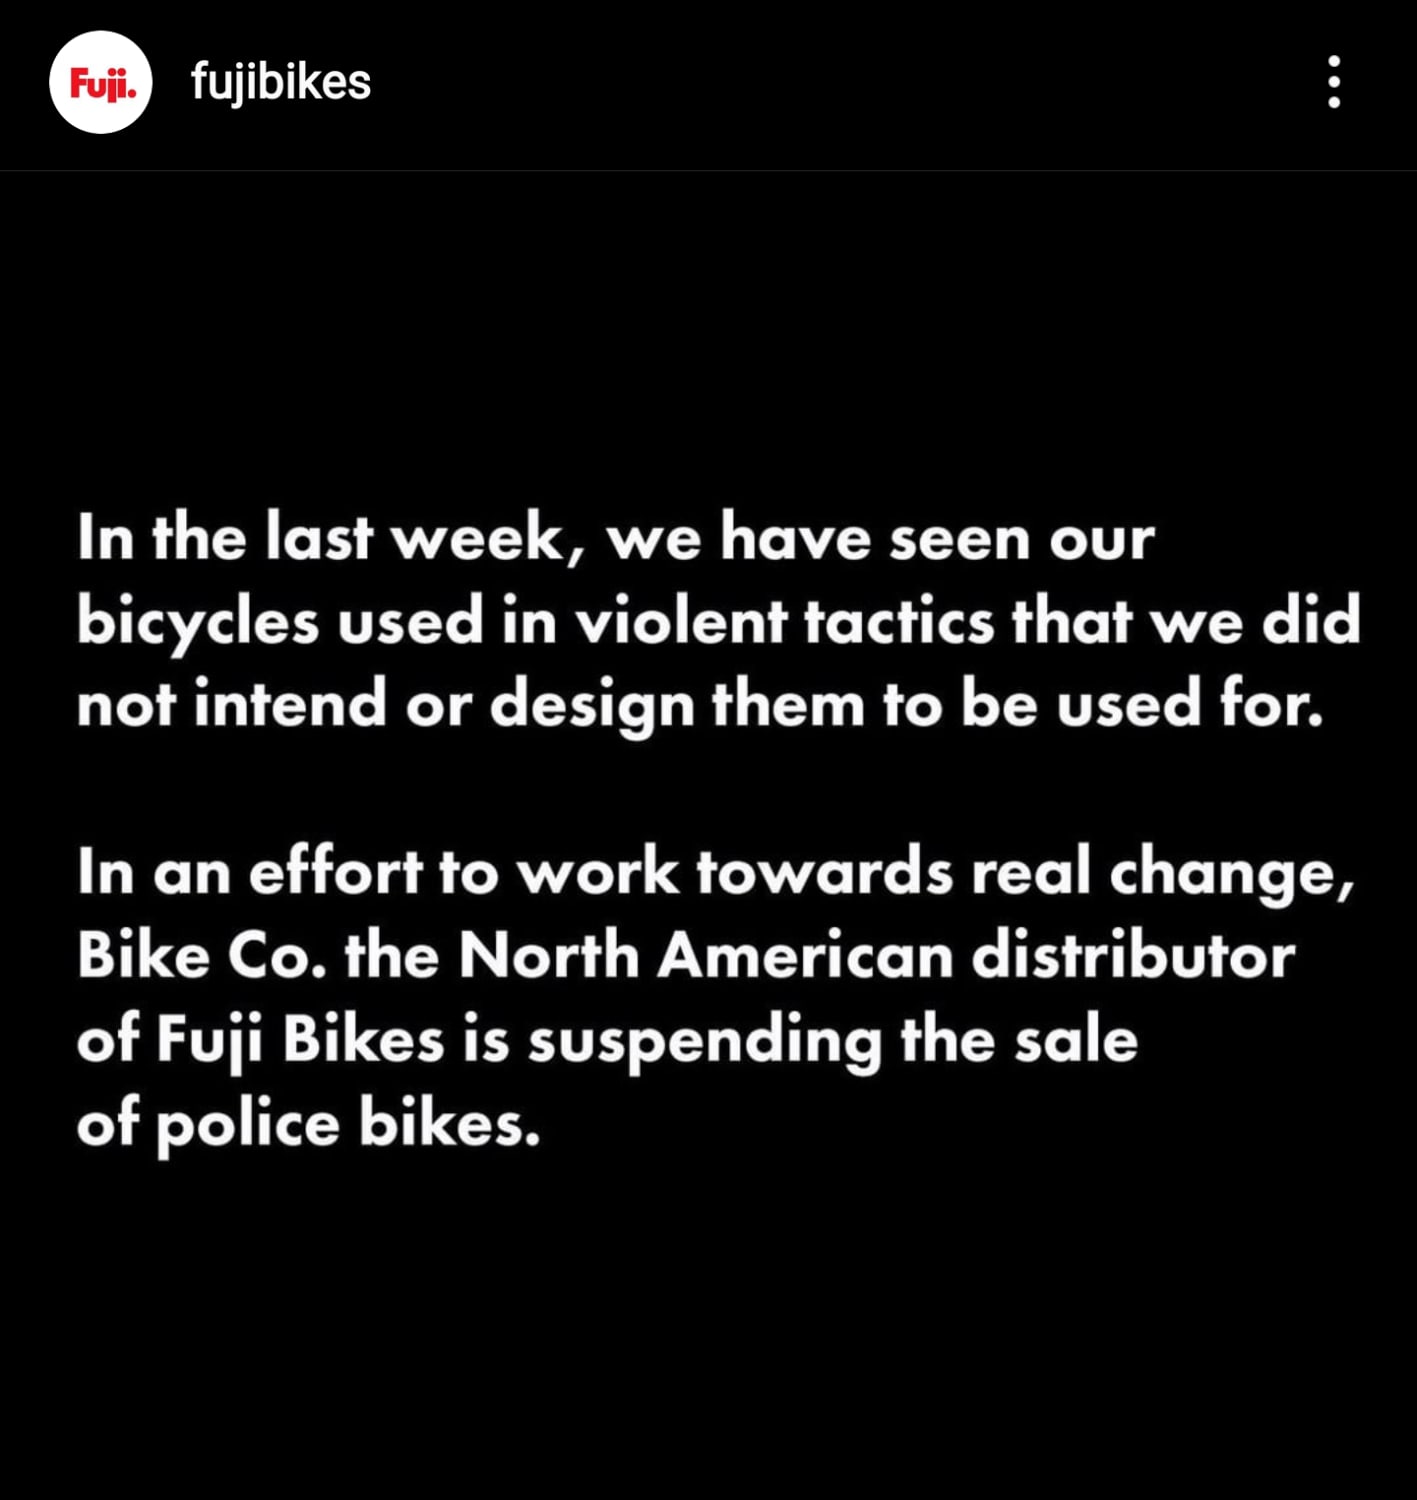 Bike Co., Fuji's NA distributor, suspends sales of police bikes.